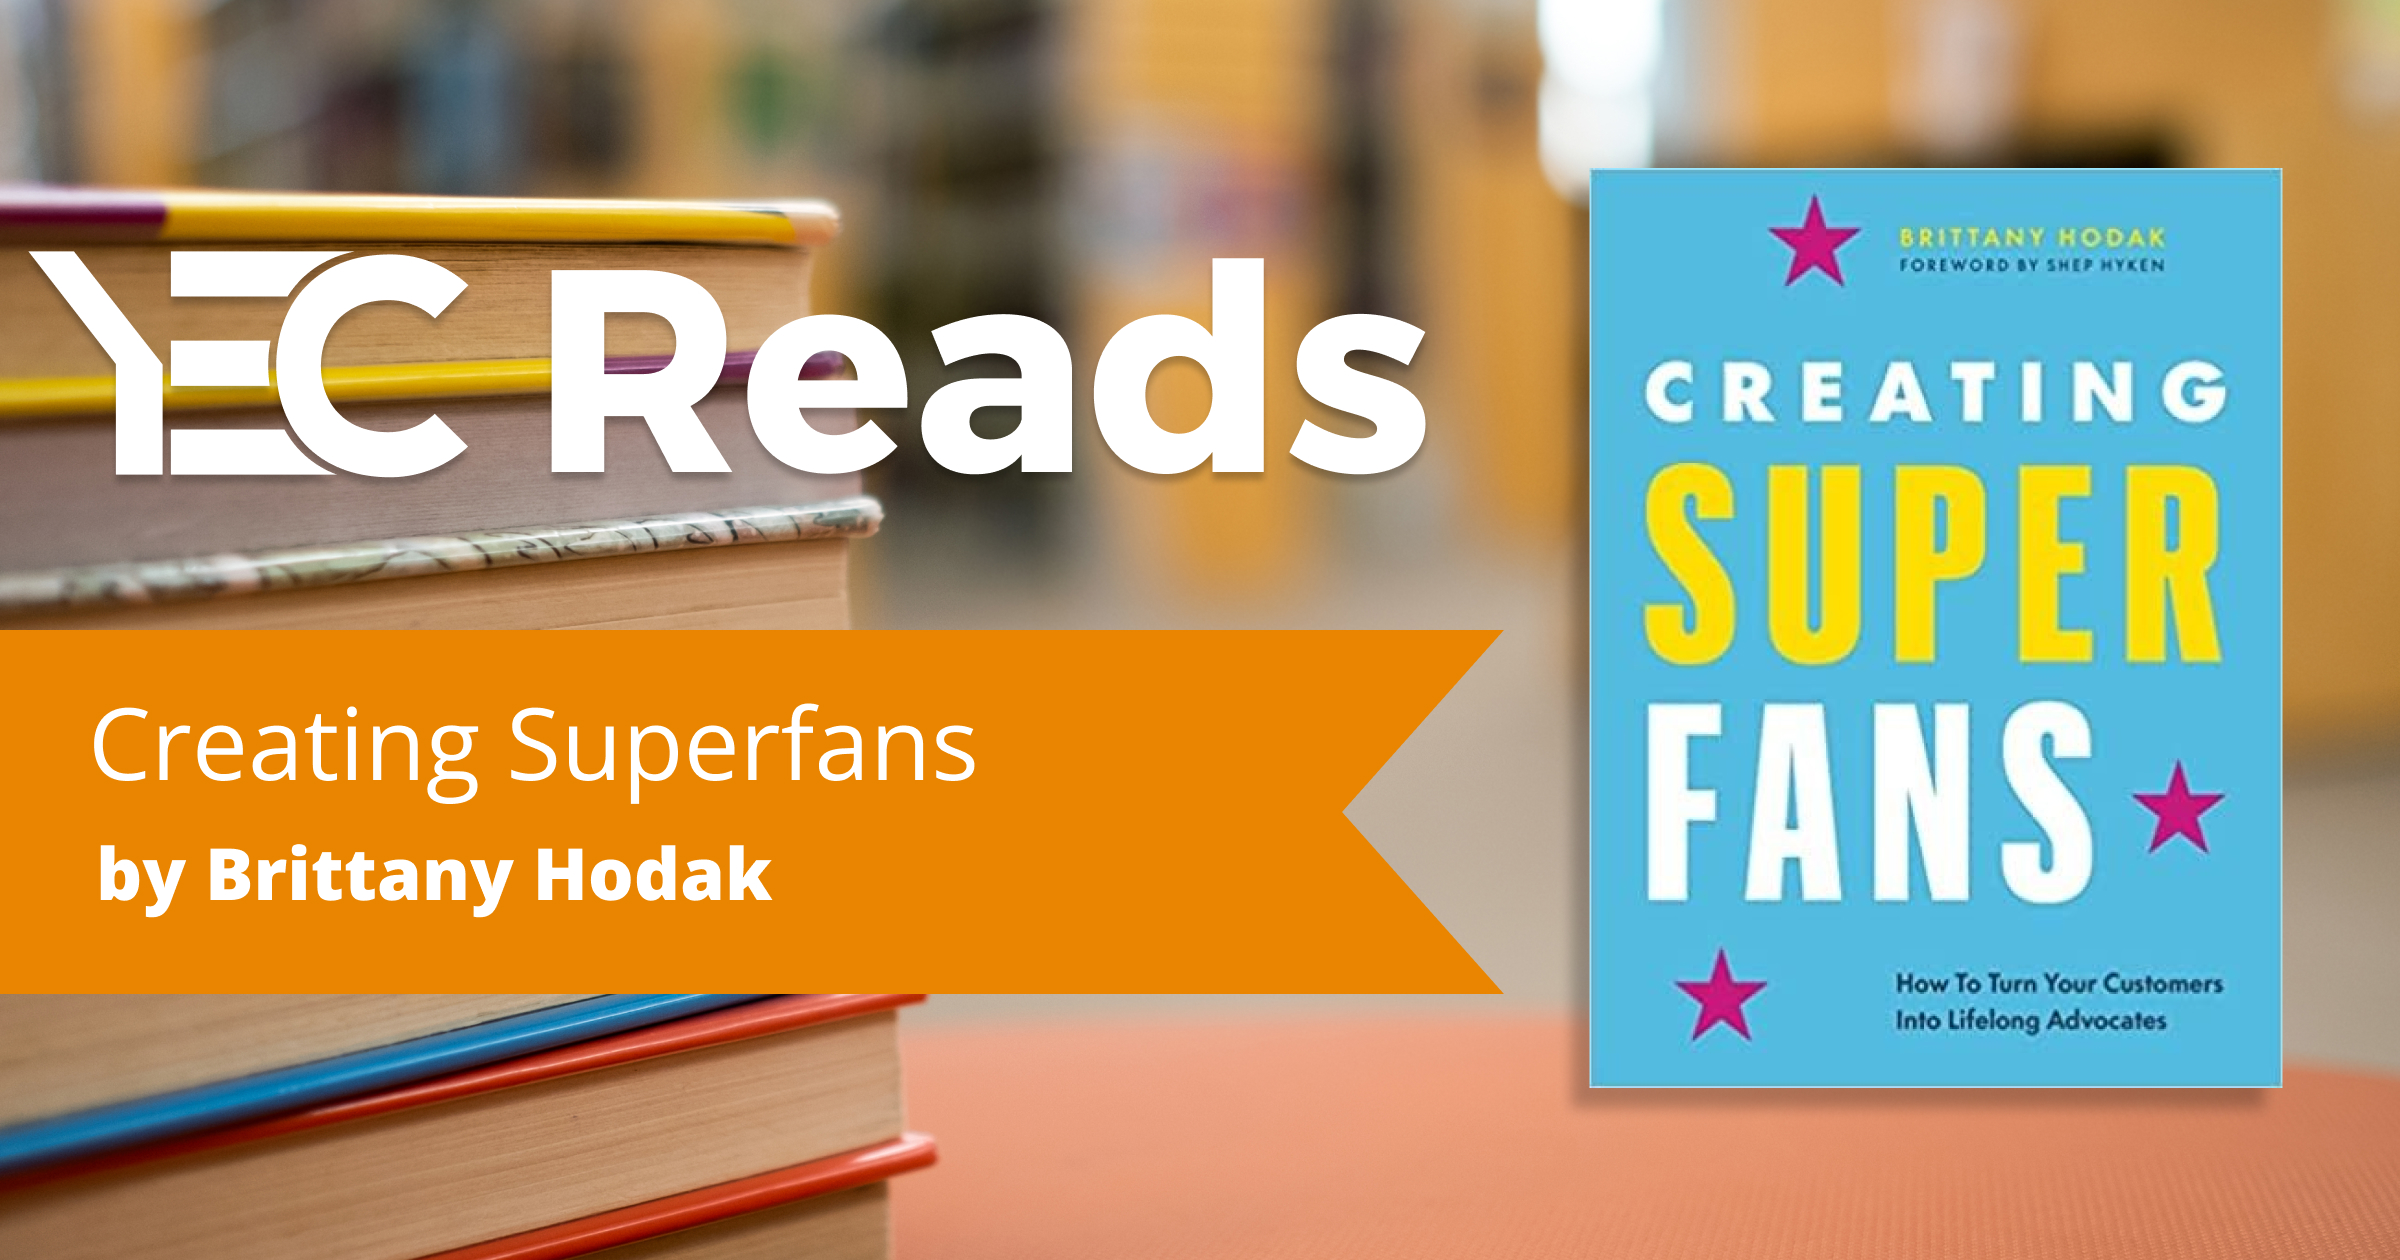 YEC Reads: Superfans by Brittany Hodak